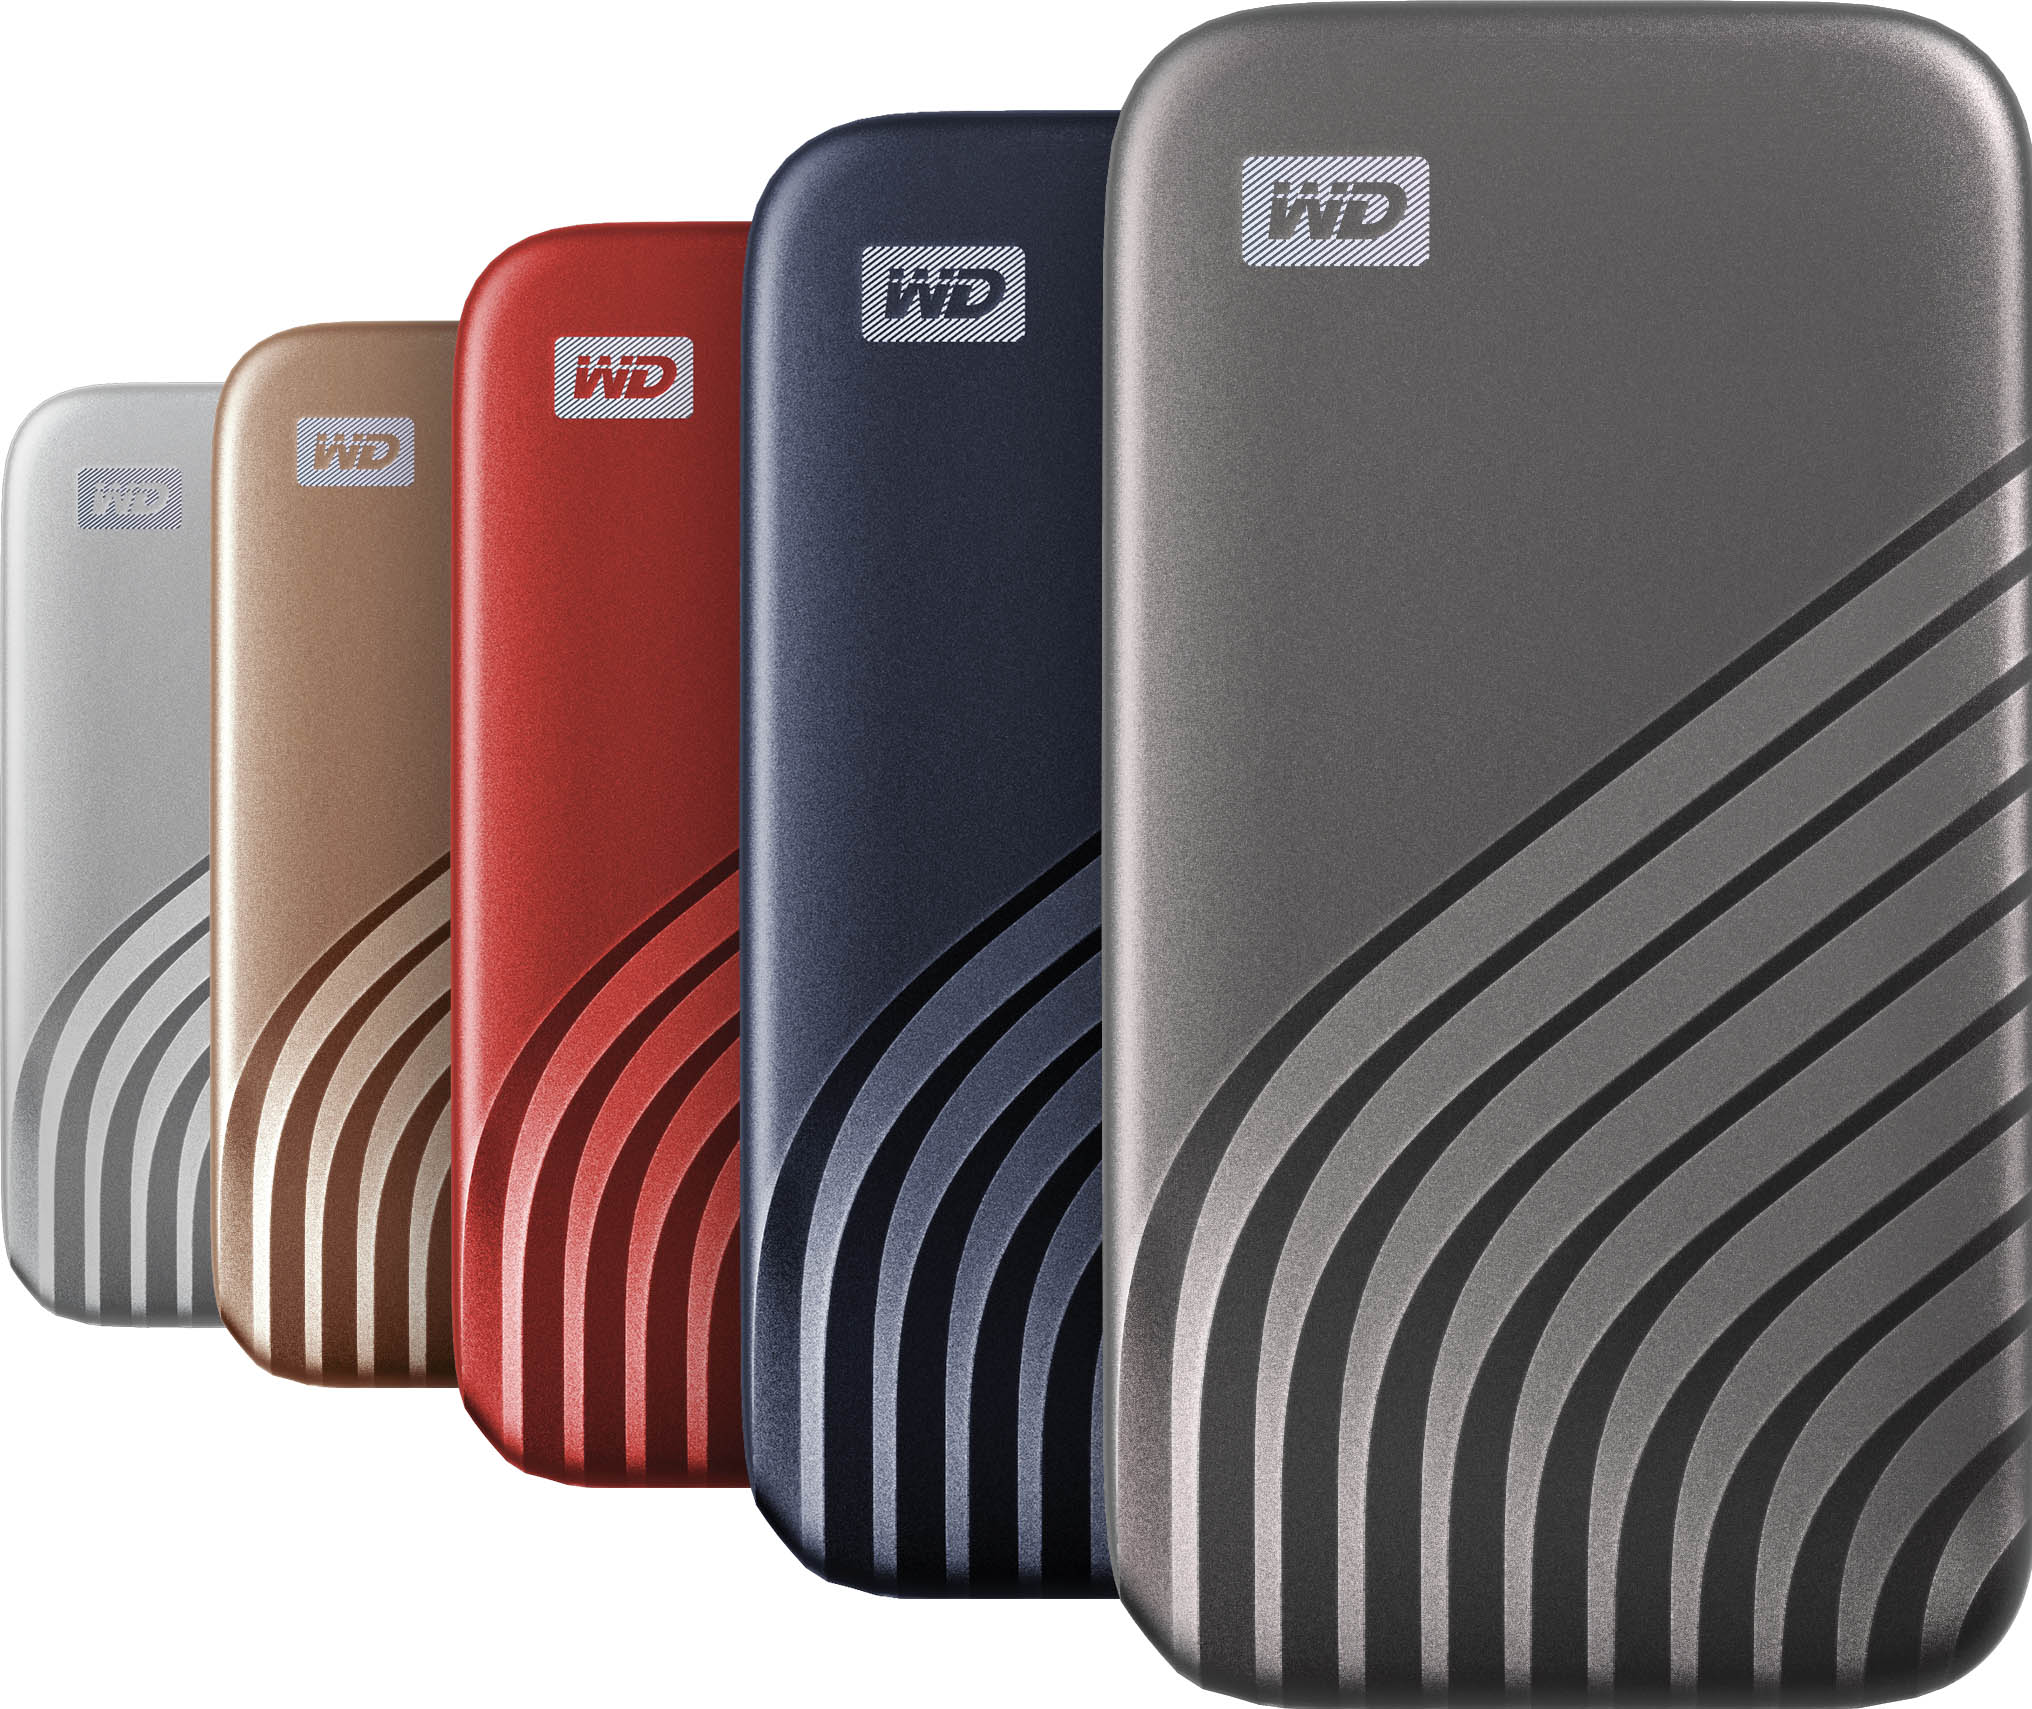 MPP SSD Full color range 2